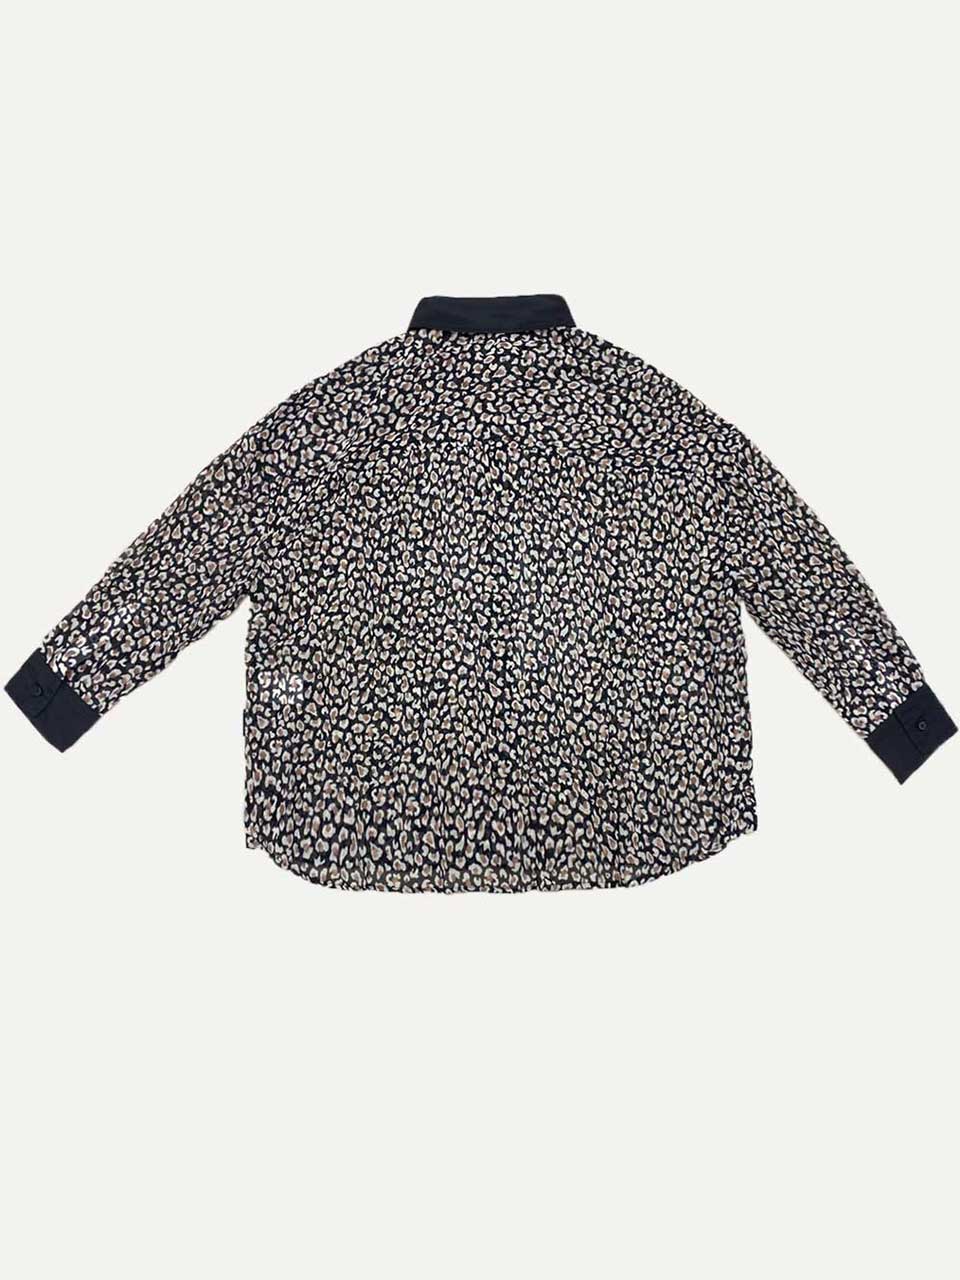 Colored leopard shirt_Black